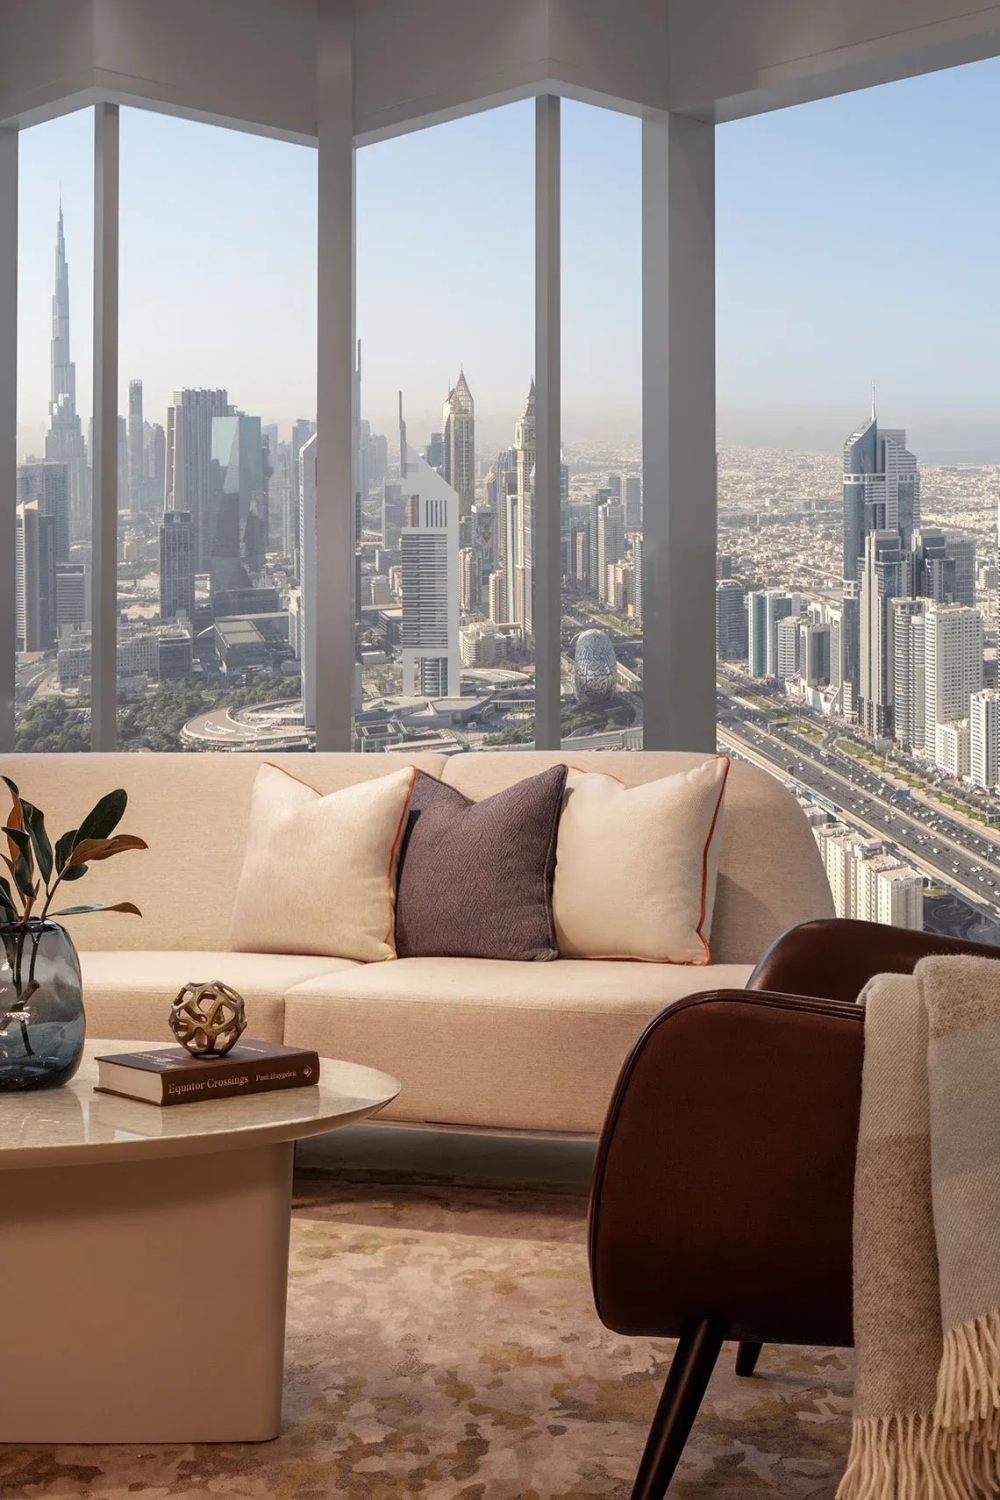 丹尼斯顿-迪拜扎阿比尔酒店 One & Only One Za’abeel  Dubai_20240504_001400_631.jpg